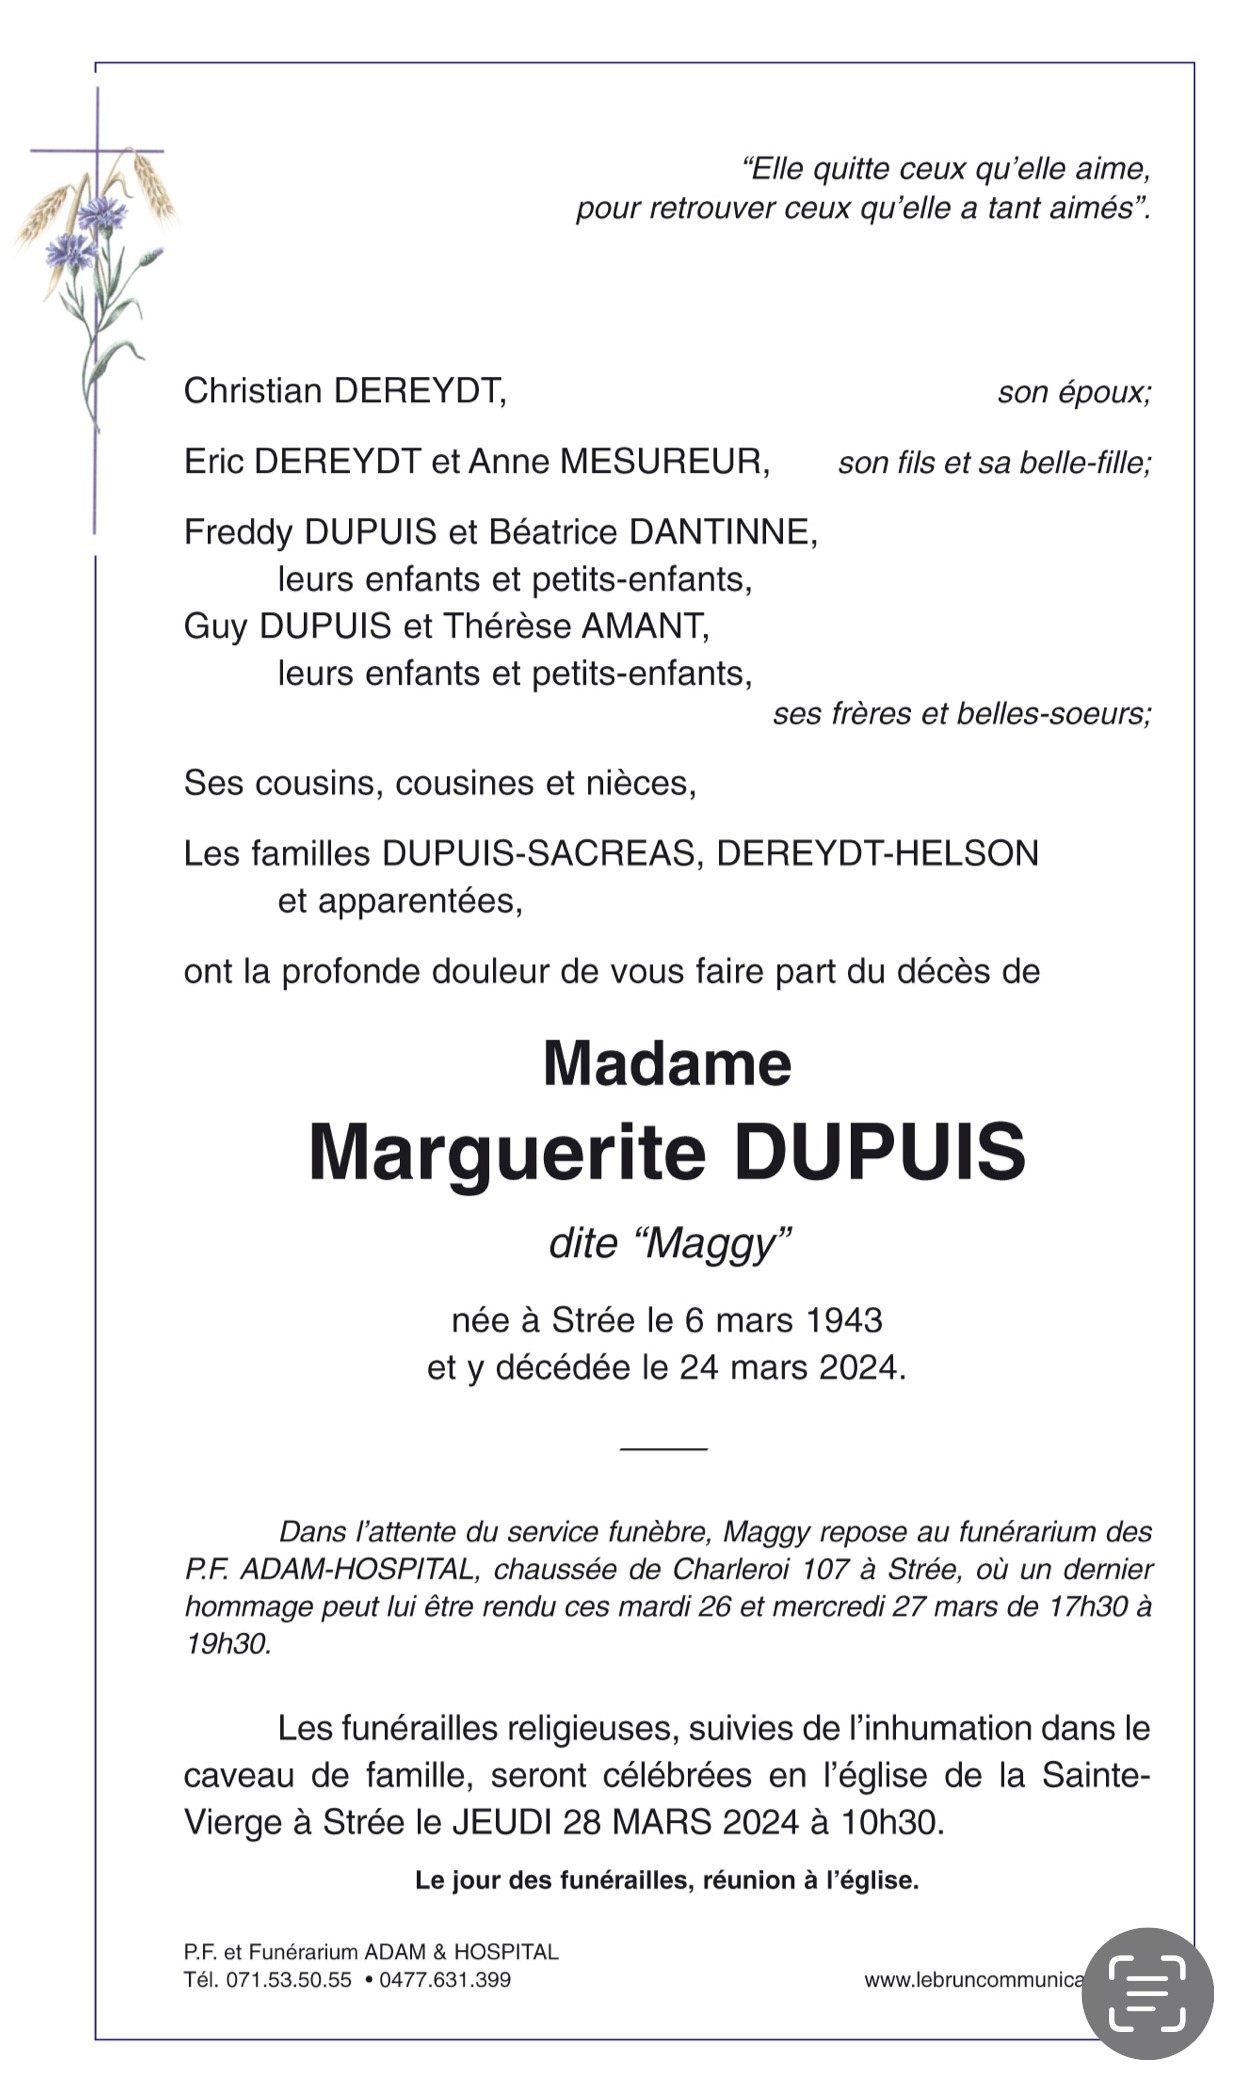 Marguerite DUPUIS | Funérailles Adam Hospital